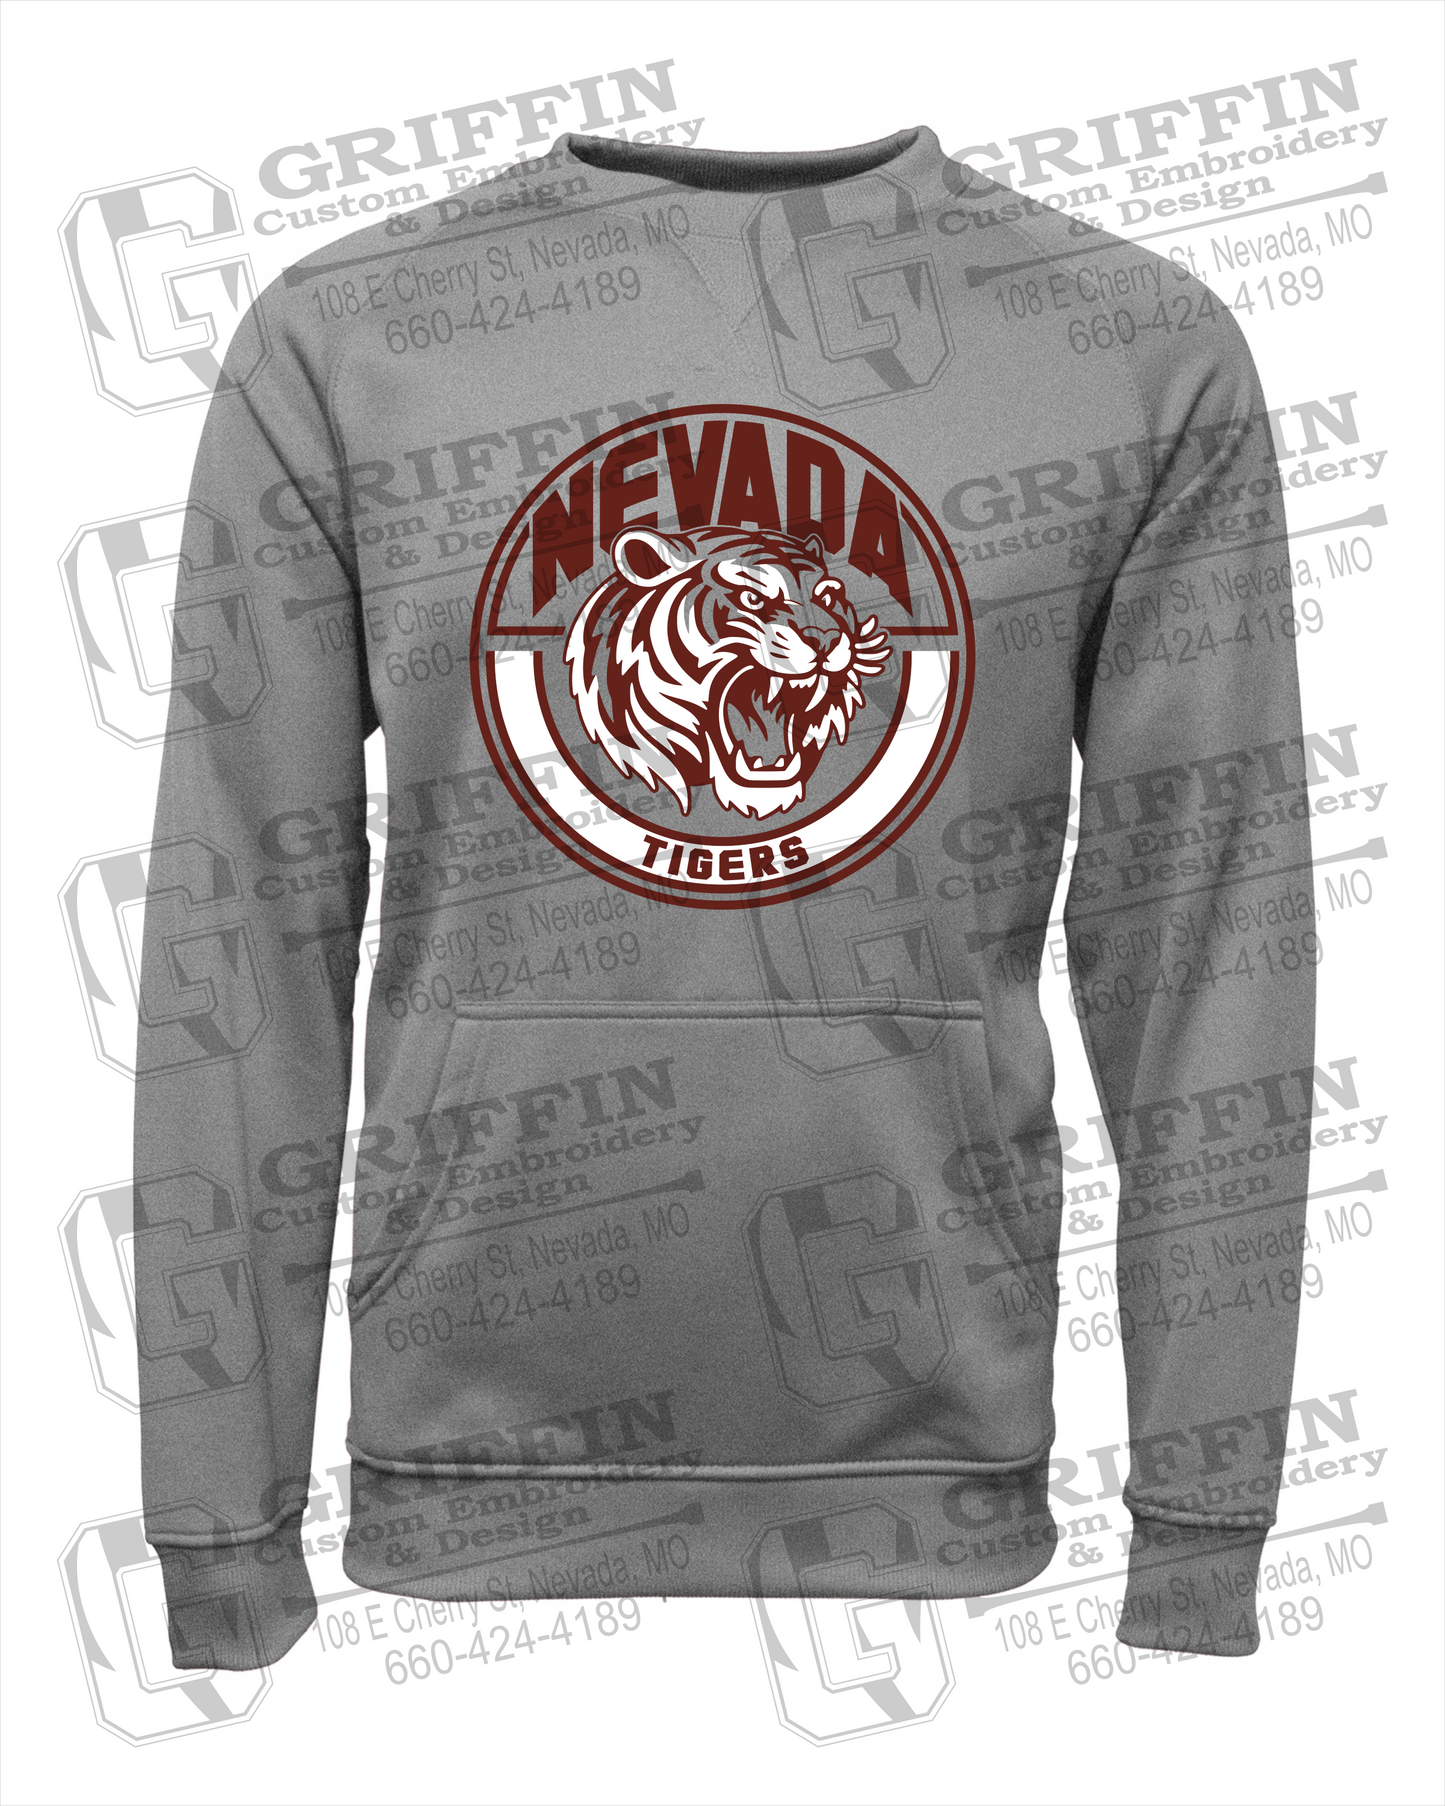 Nevada Tigers 24-H Youth Sweatshirt